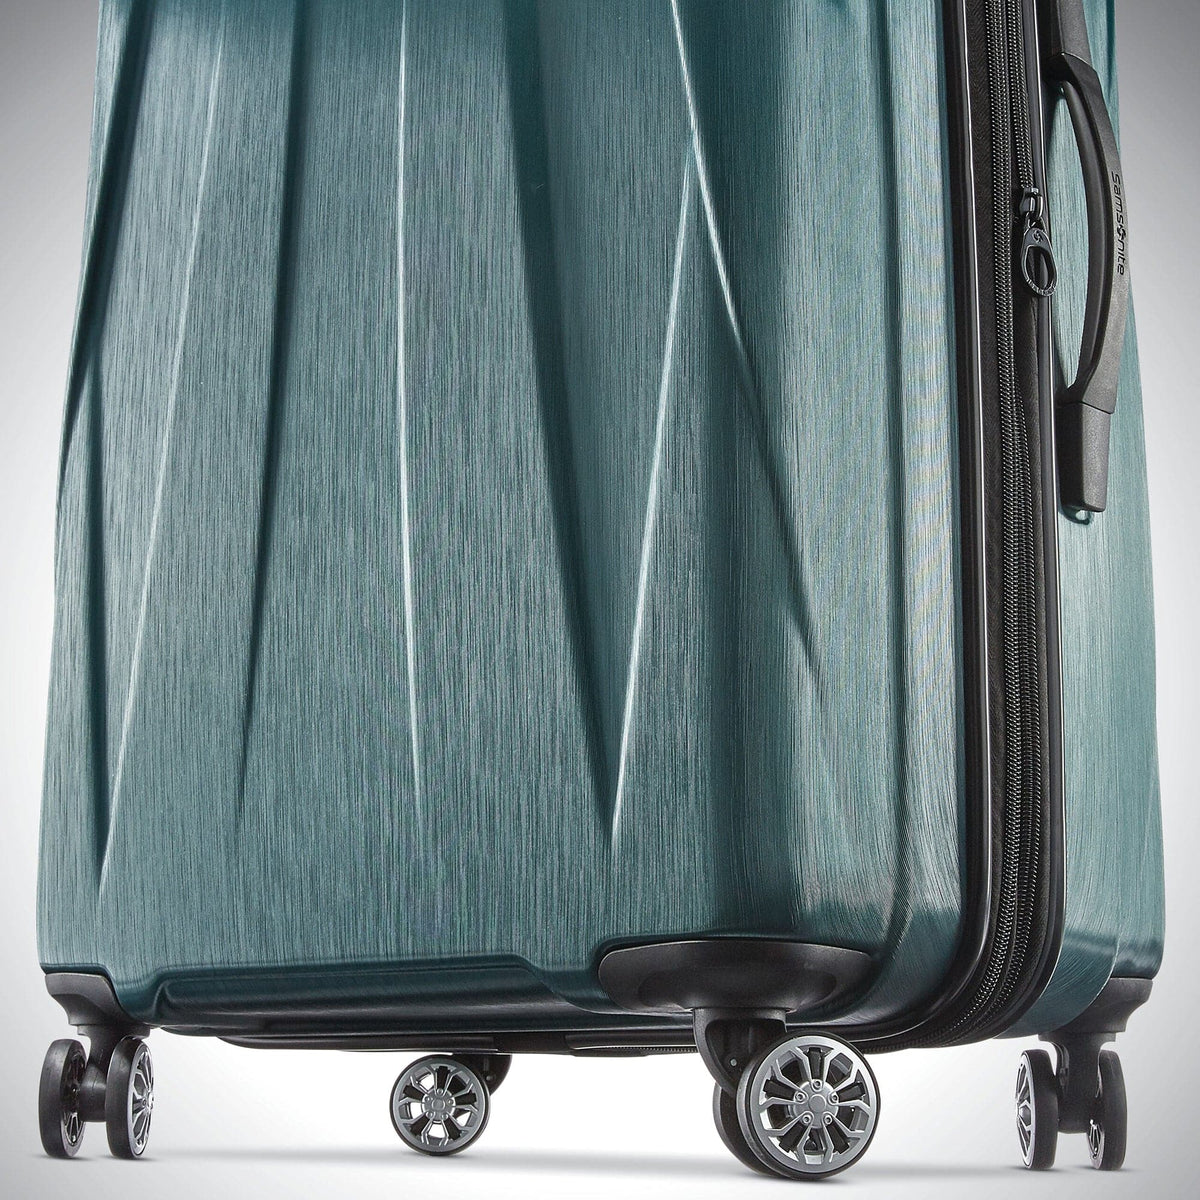 Samsonite Centric 2 Medium Spinner Luggage